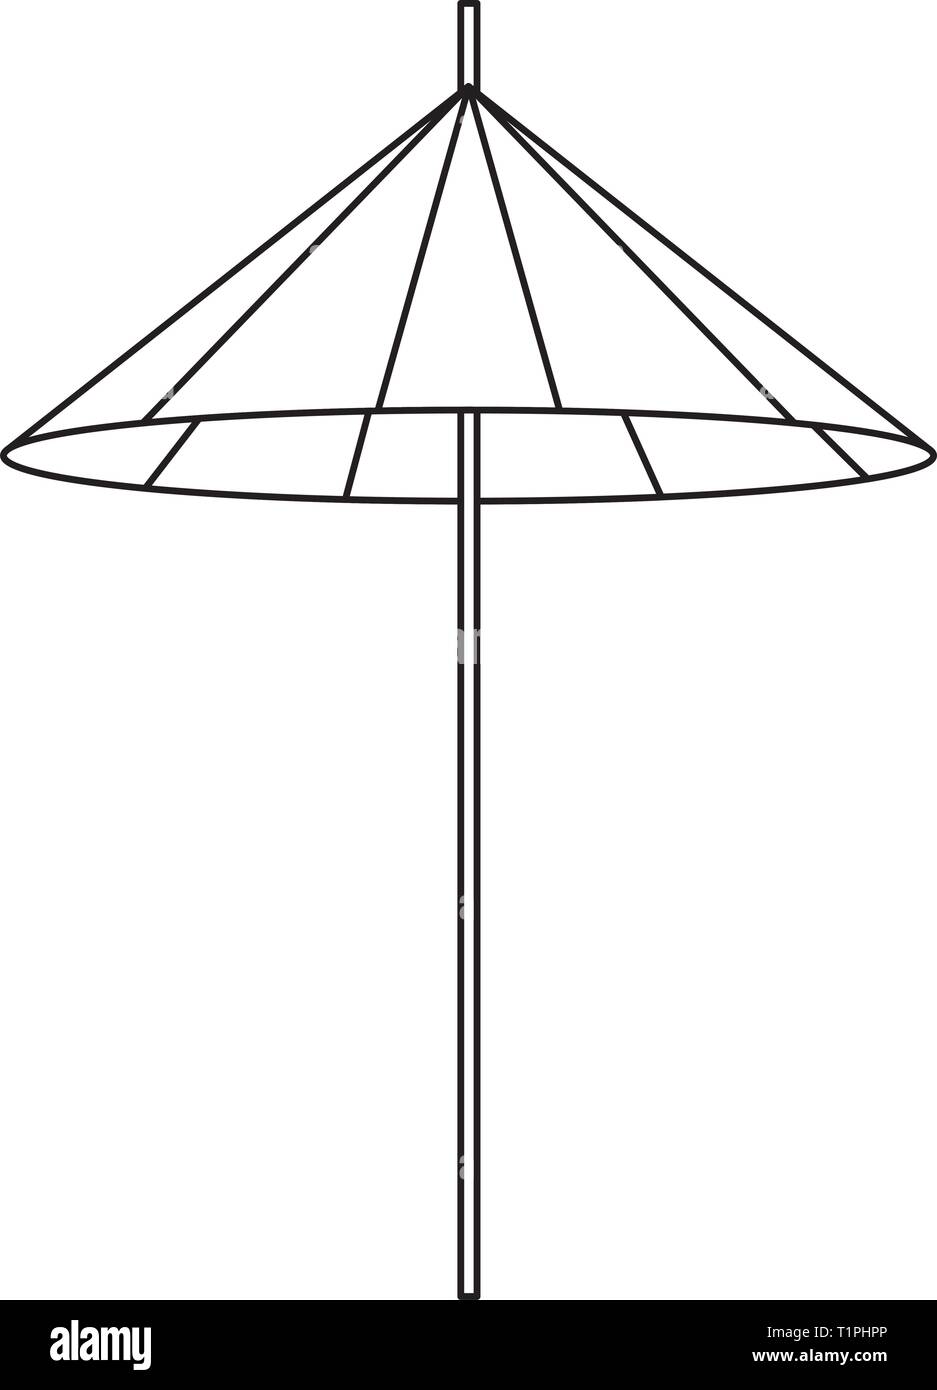 umbrella icon isolated black and white Stock Vector